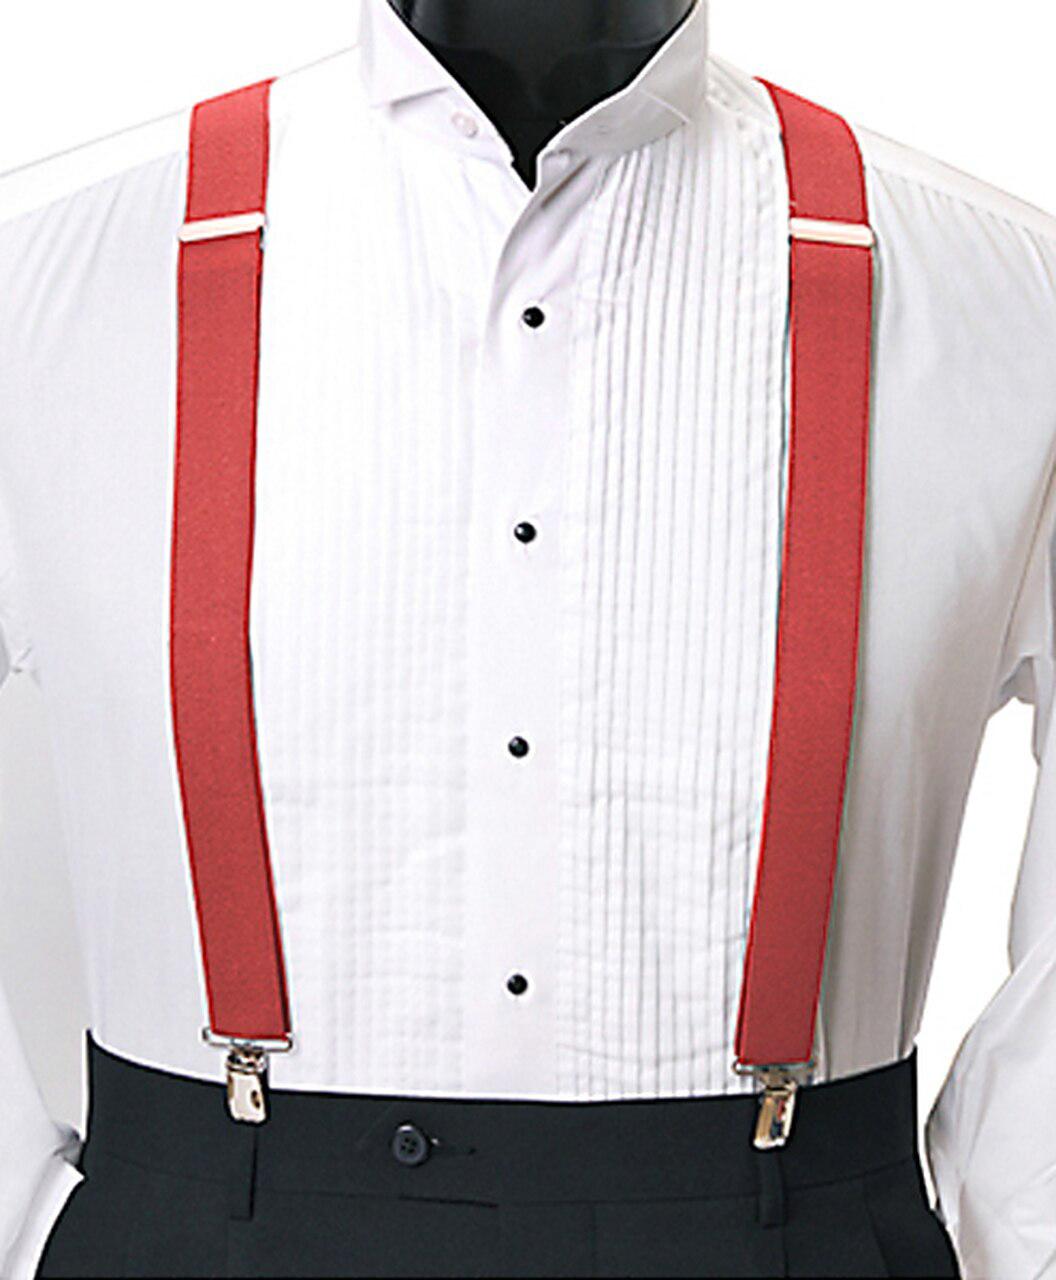  Clip Suspender - Red